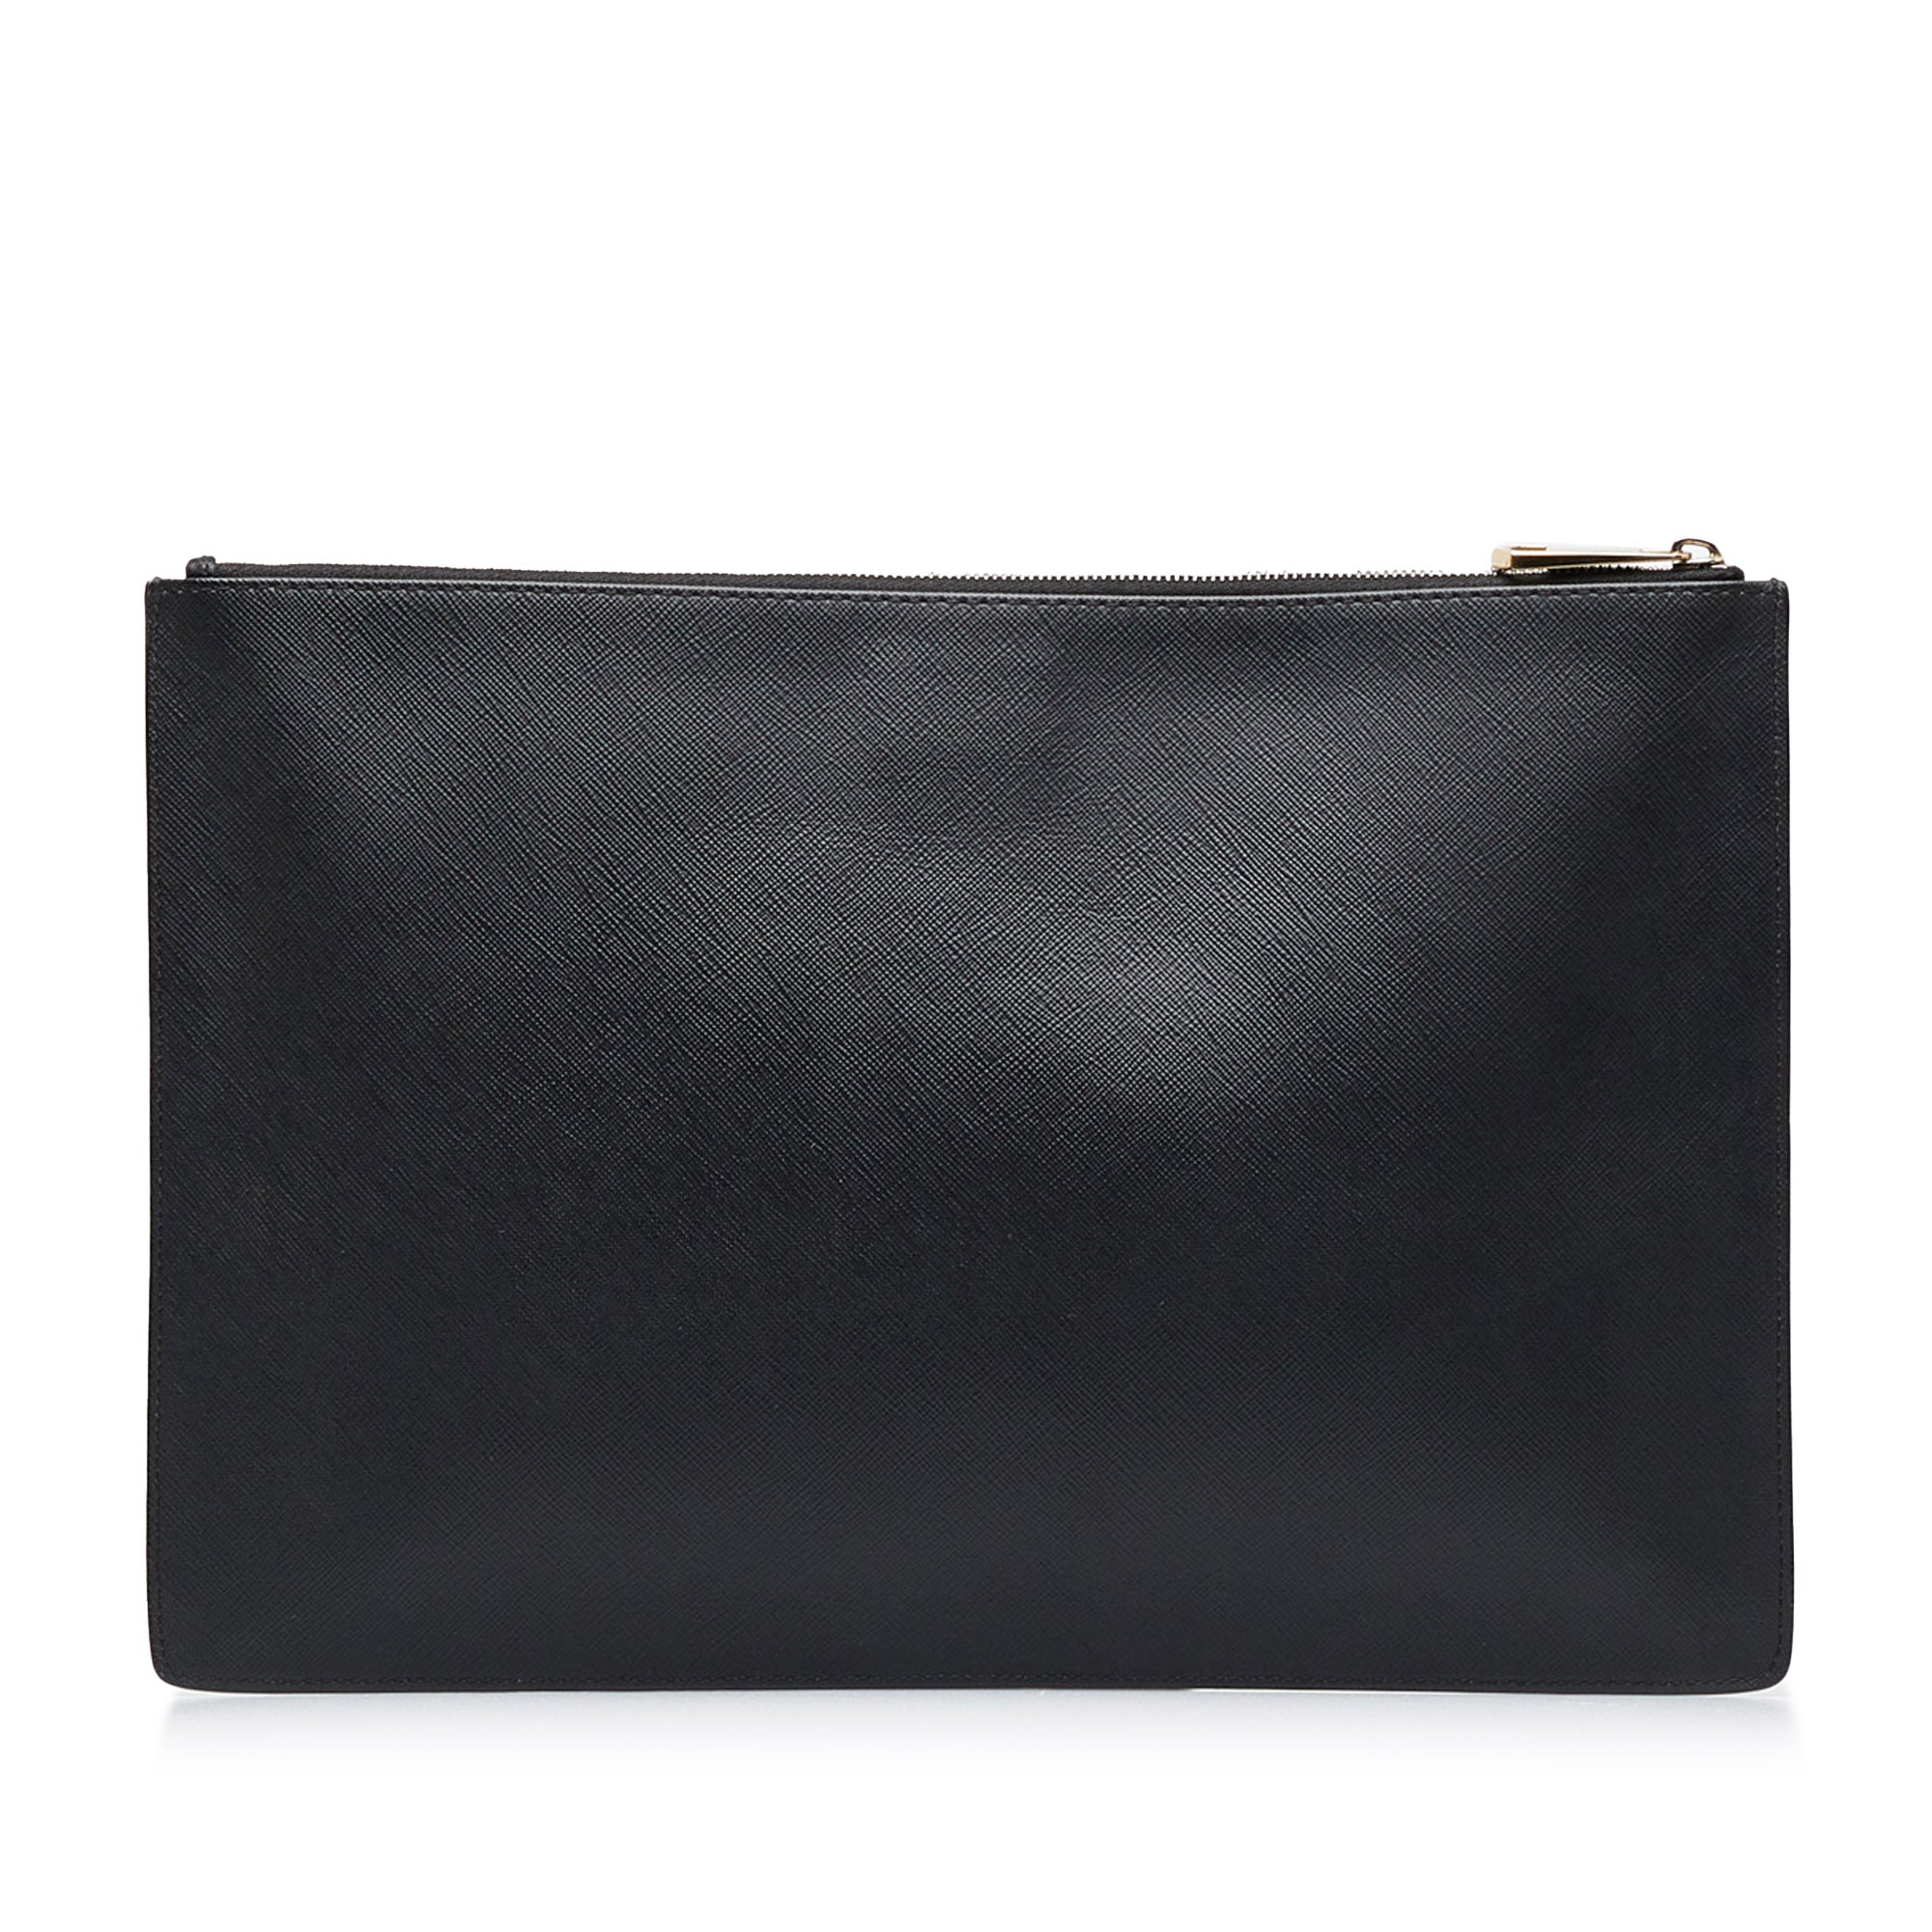 Black Givenchy Printed Clutch Bag